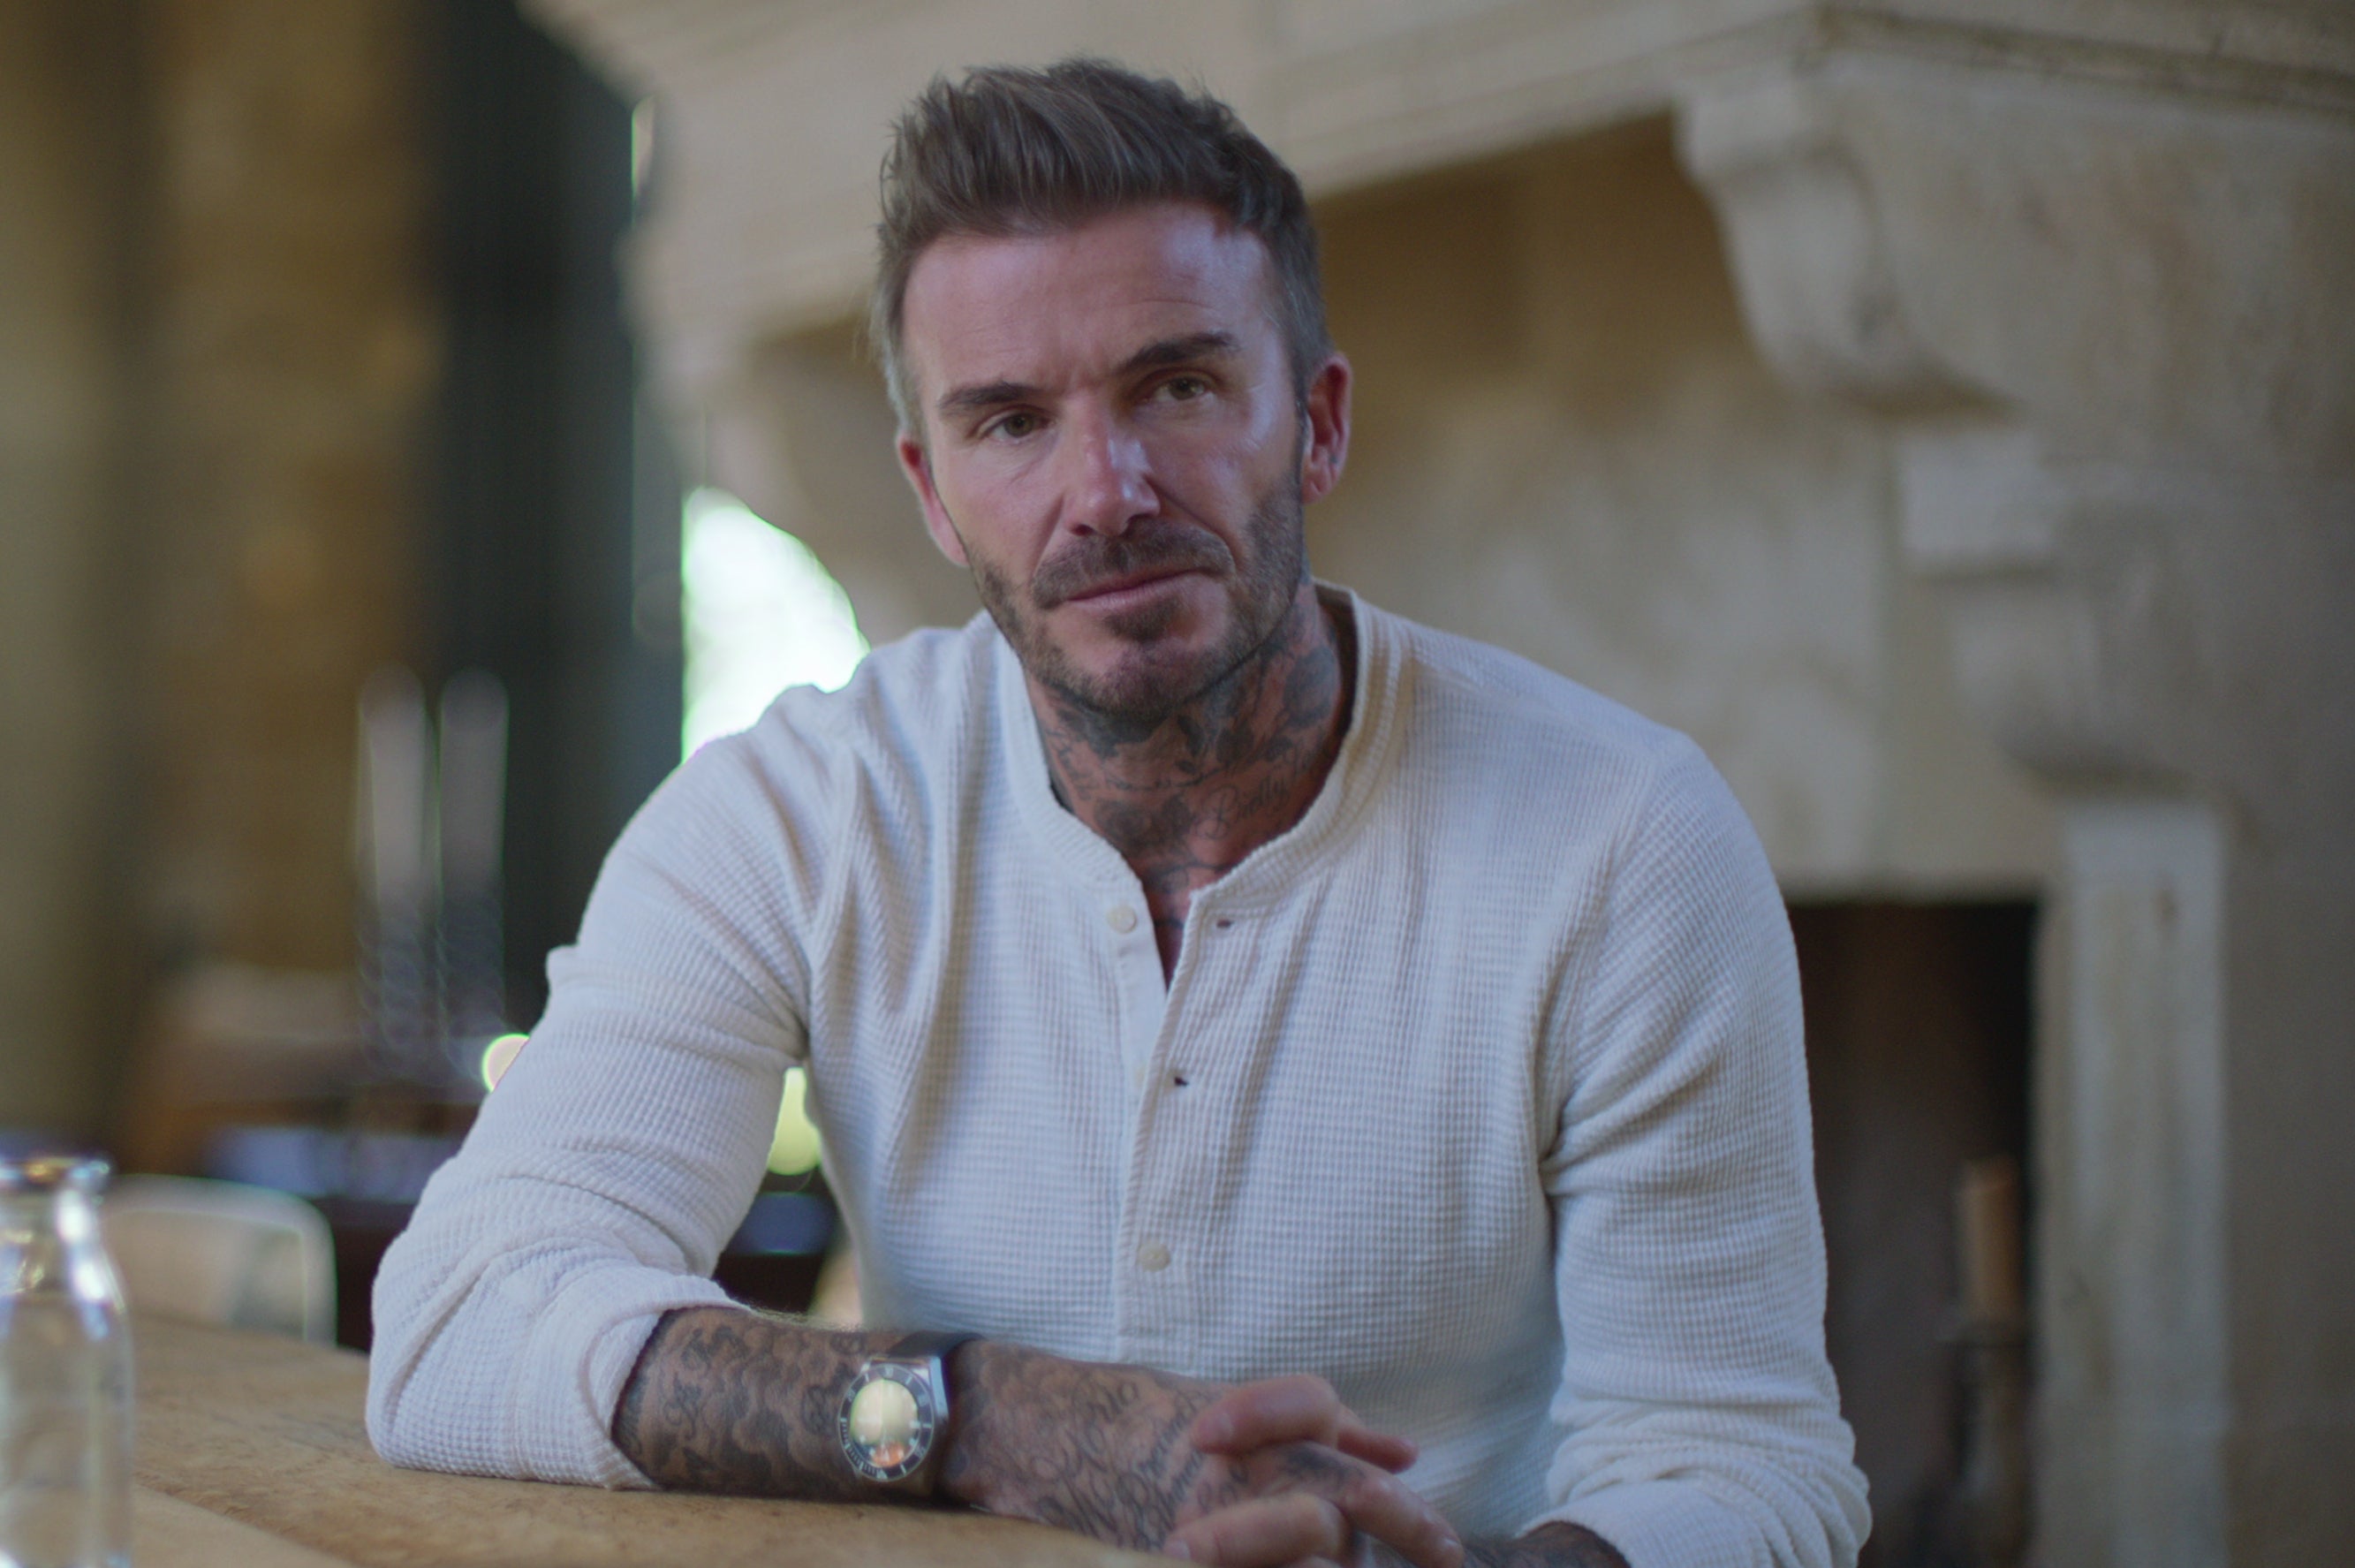 A modern-day David Beckham being interview for the Netflix documentary